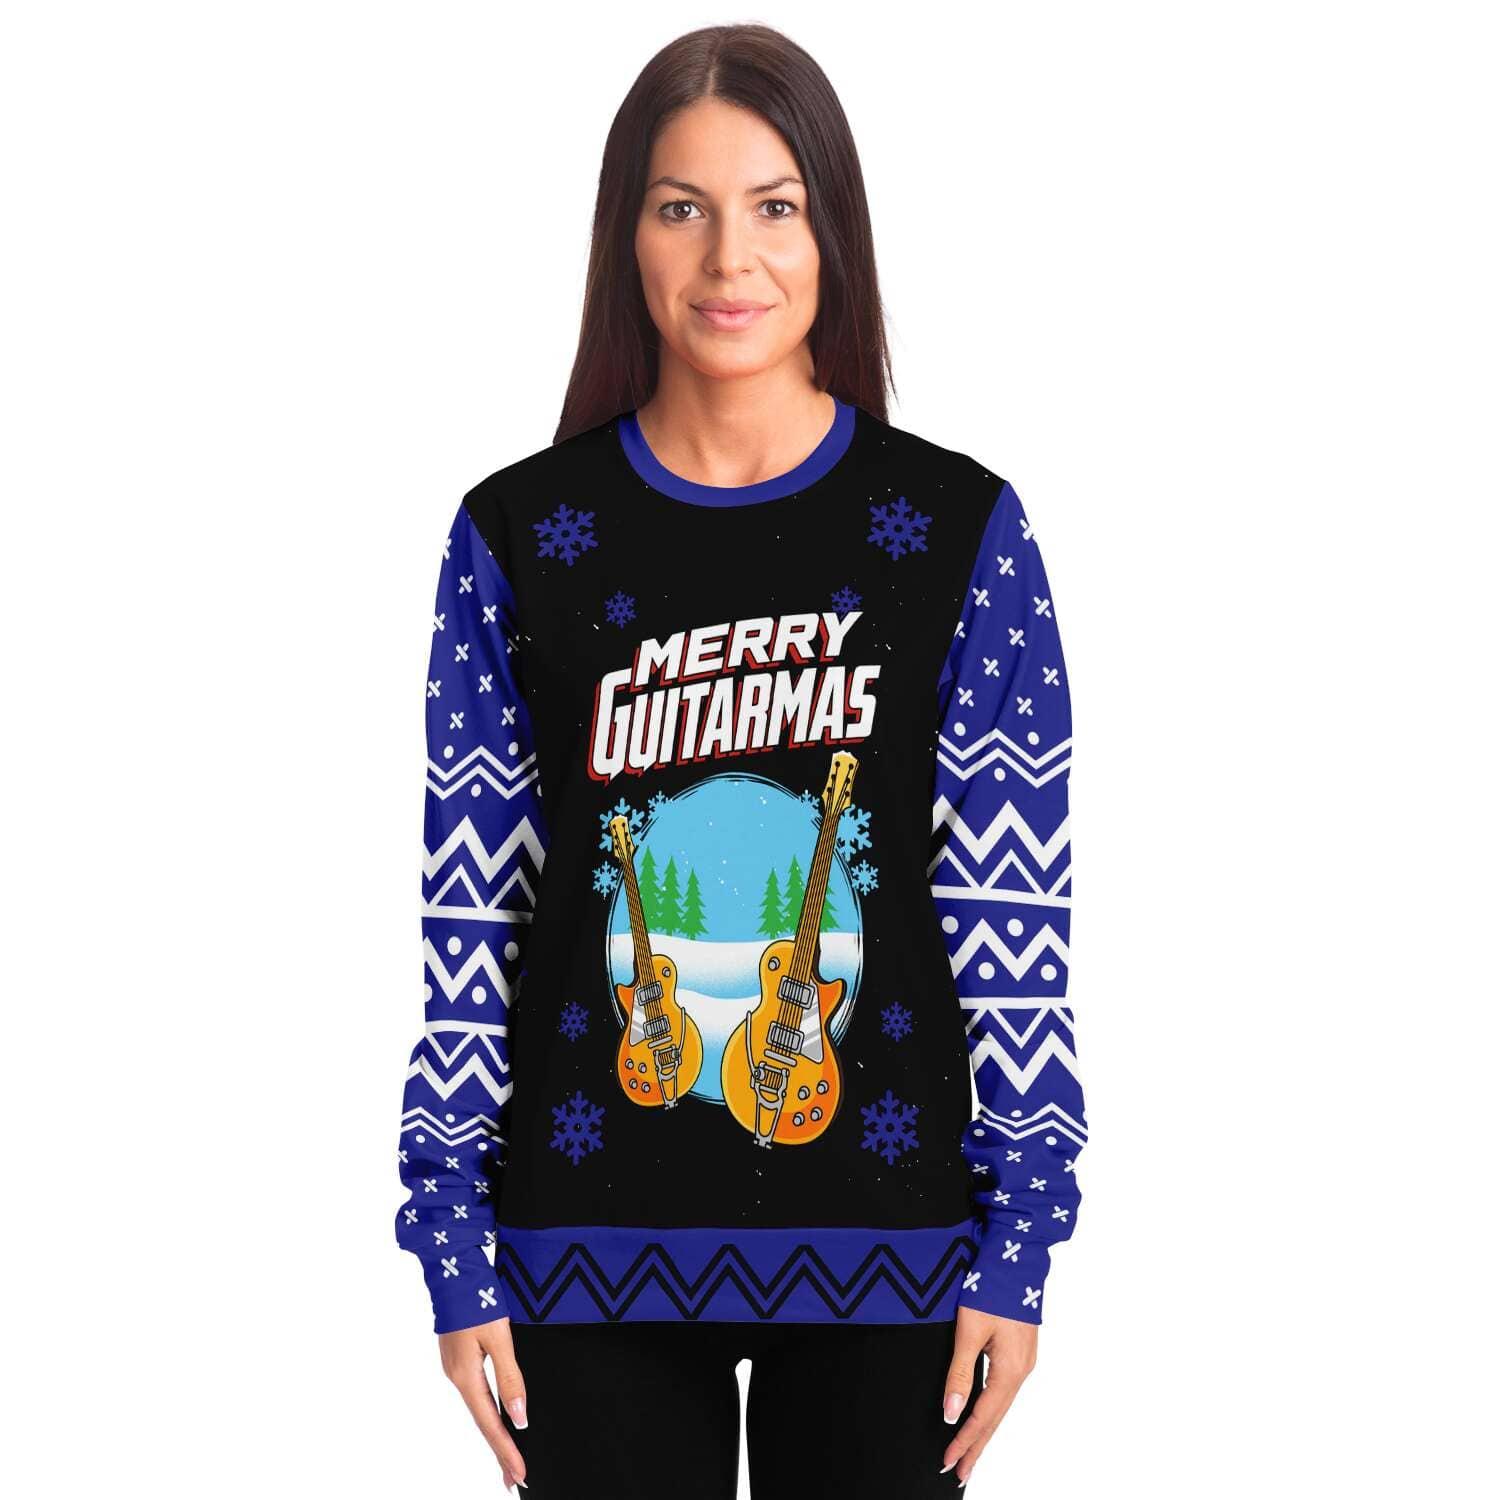 Merry Guitarmas Sweatshirt for women - TopKoalaTee